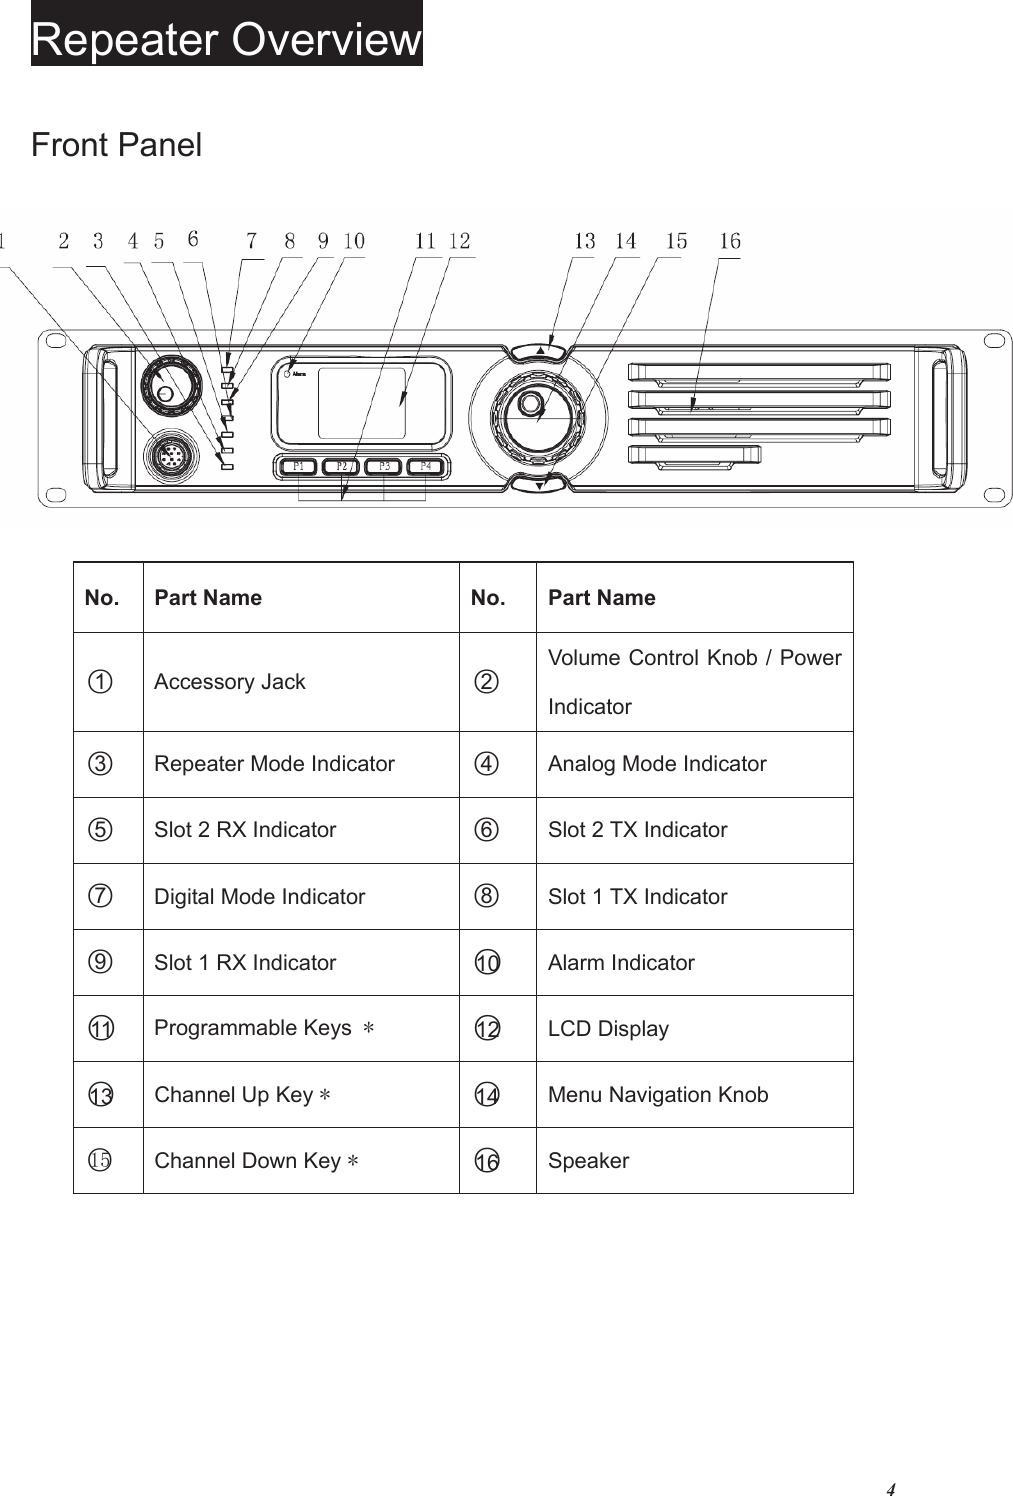 4Repeater OverviewFront Panel  No. Part Name No. Part Nameƻ1Accessory Jack ƻ2Volume Control Knob / Power Indicatorƻ3Repeater Mode Indicator  ƻ4Analog Mode Indicator ƻ5Slot 2 RX Indicator  ƻ6Slot 2 TX Indicator ƻ7  Digital Mode Indicator    ƻ8  Slot 1 TX Indicator ƻ9  Slot 1 RX Indicator  ƻ10   Alarm Indicator   ƻ11   Programmable Keys ƻ12   LCD Display  ƻ13   Channel Up Key ƻ14   Menu Navigation Knobƻ  Channel Down Key ƻ16   Speaker